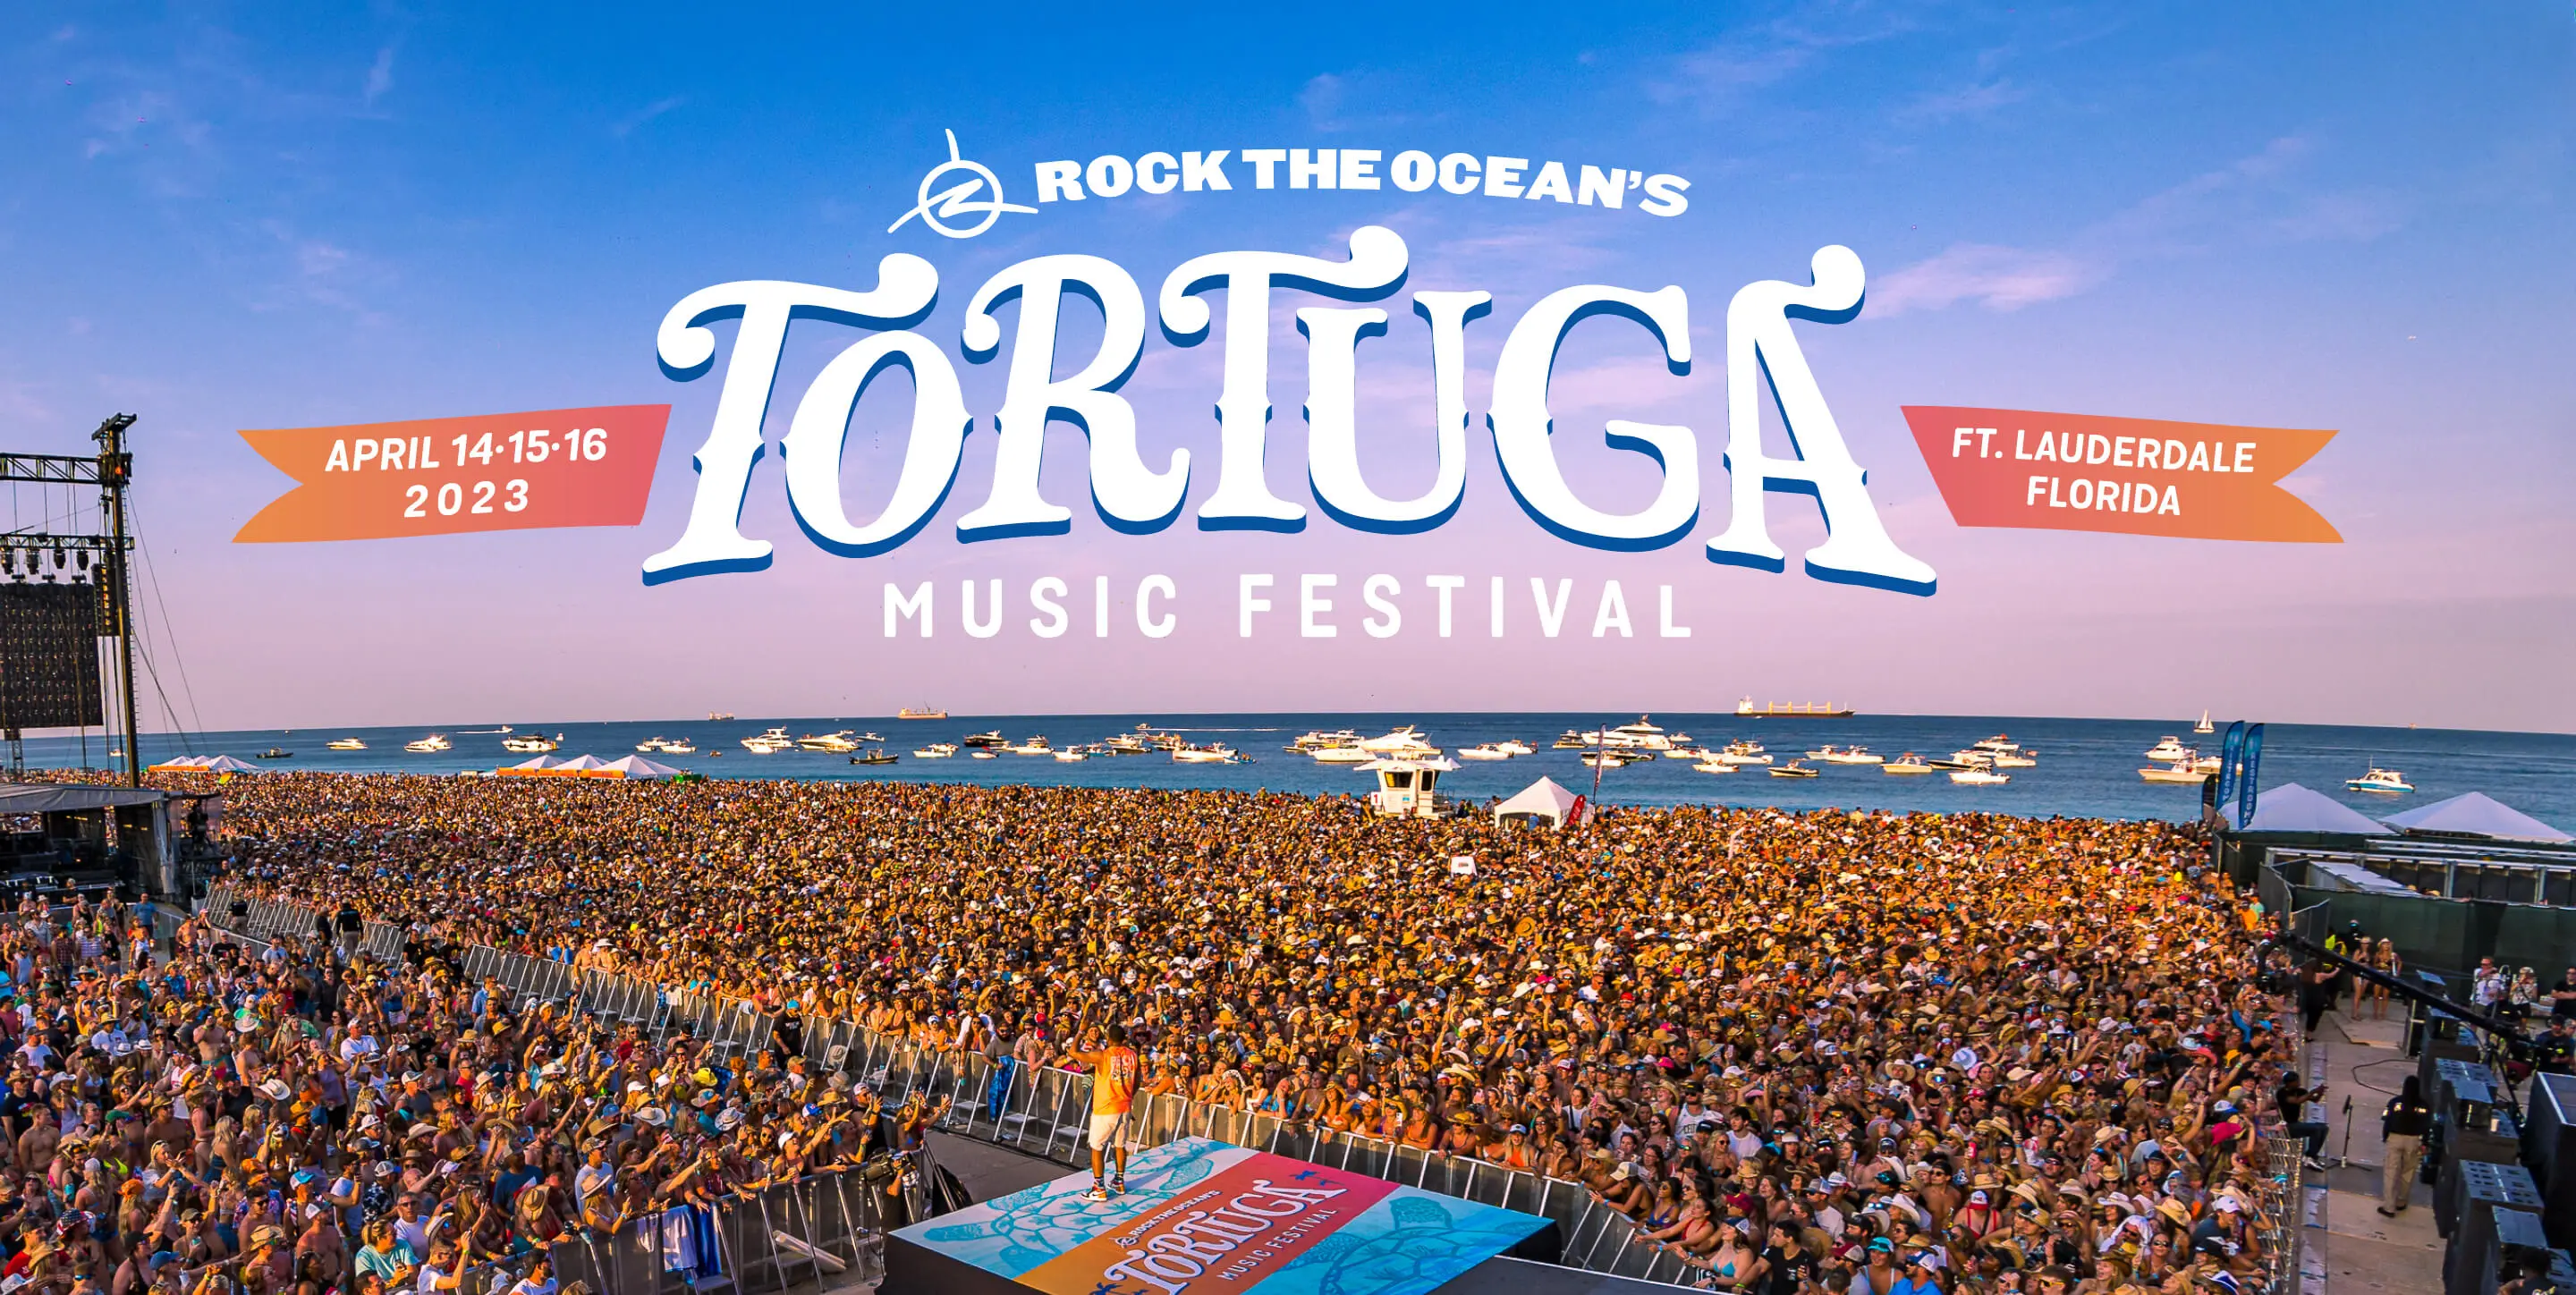 Rock the Ocean's 2023 Tortuga Music Festival